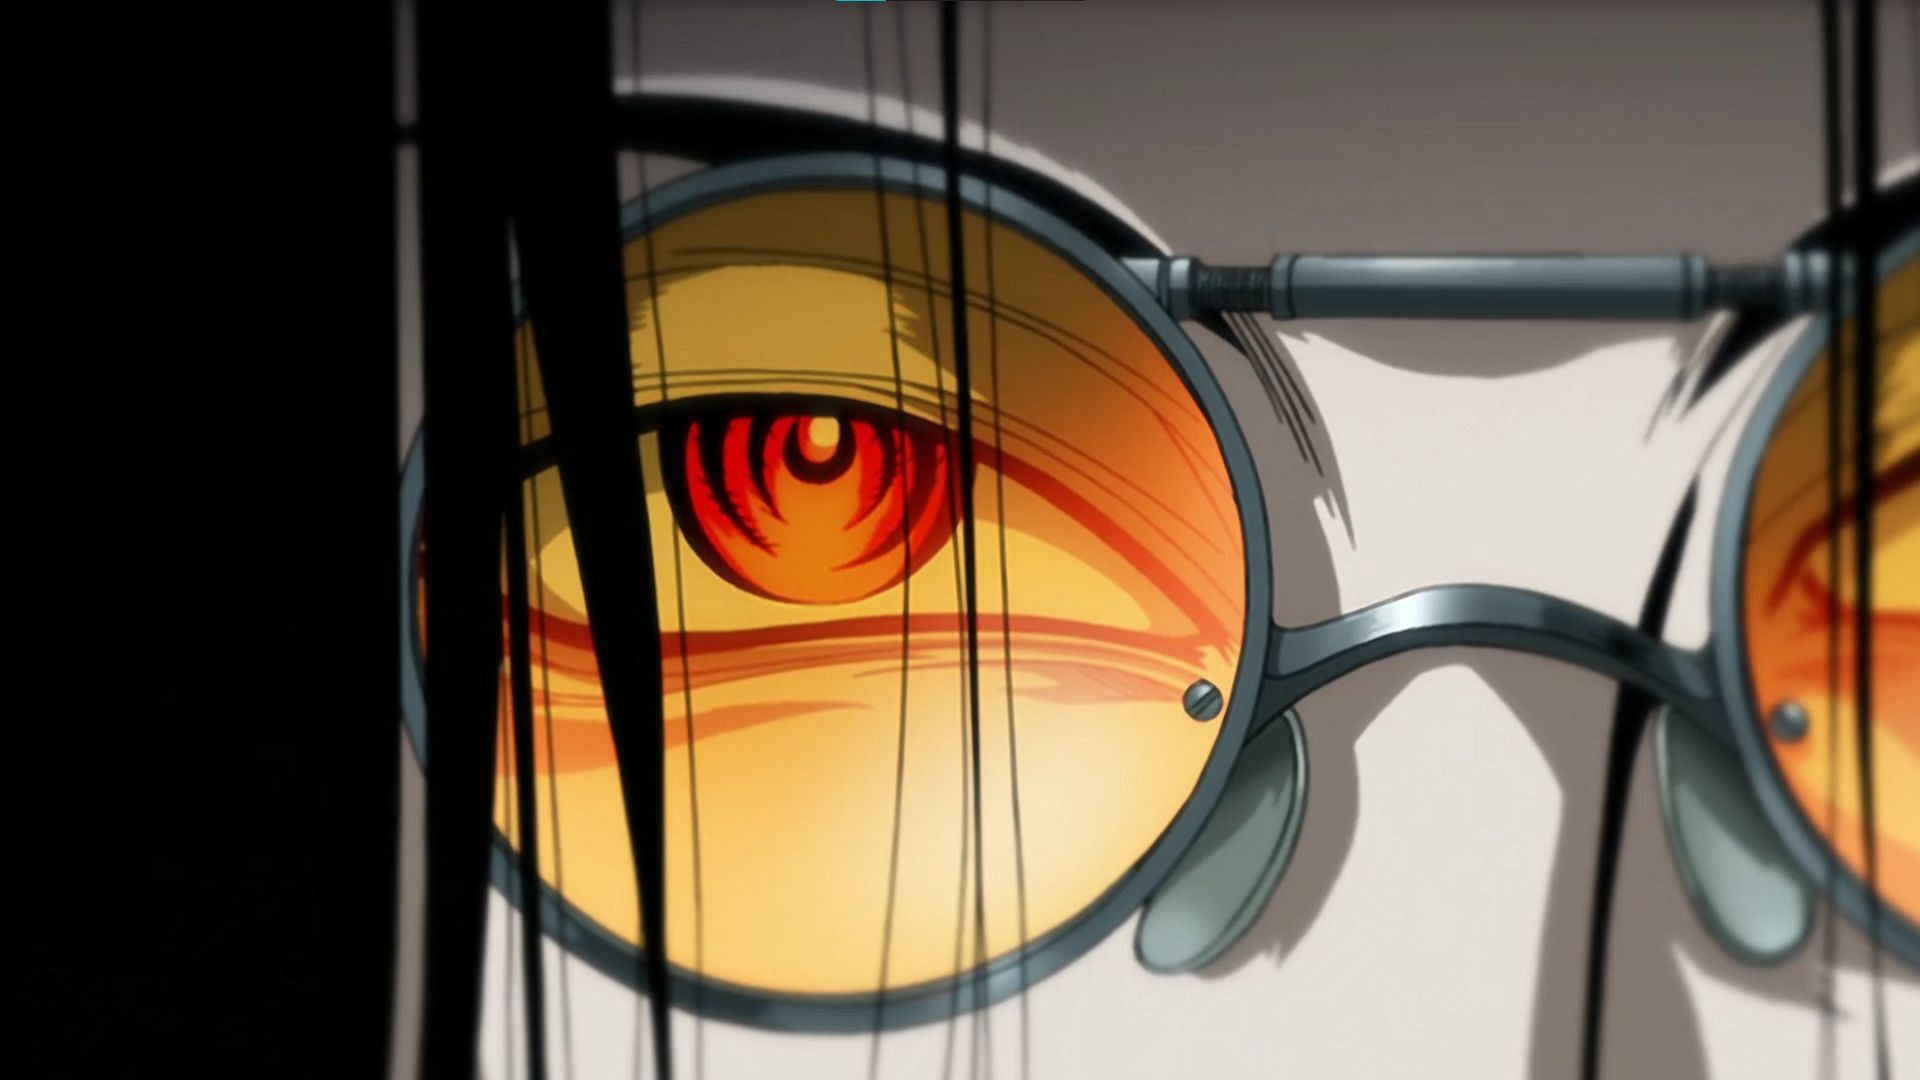 Alucard&#039;s eyes as shown in the Hellsing Ultimate anime (Image via Studio MADHOUSE)